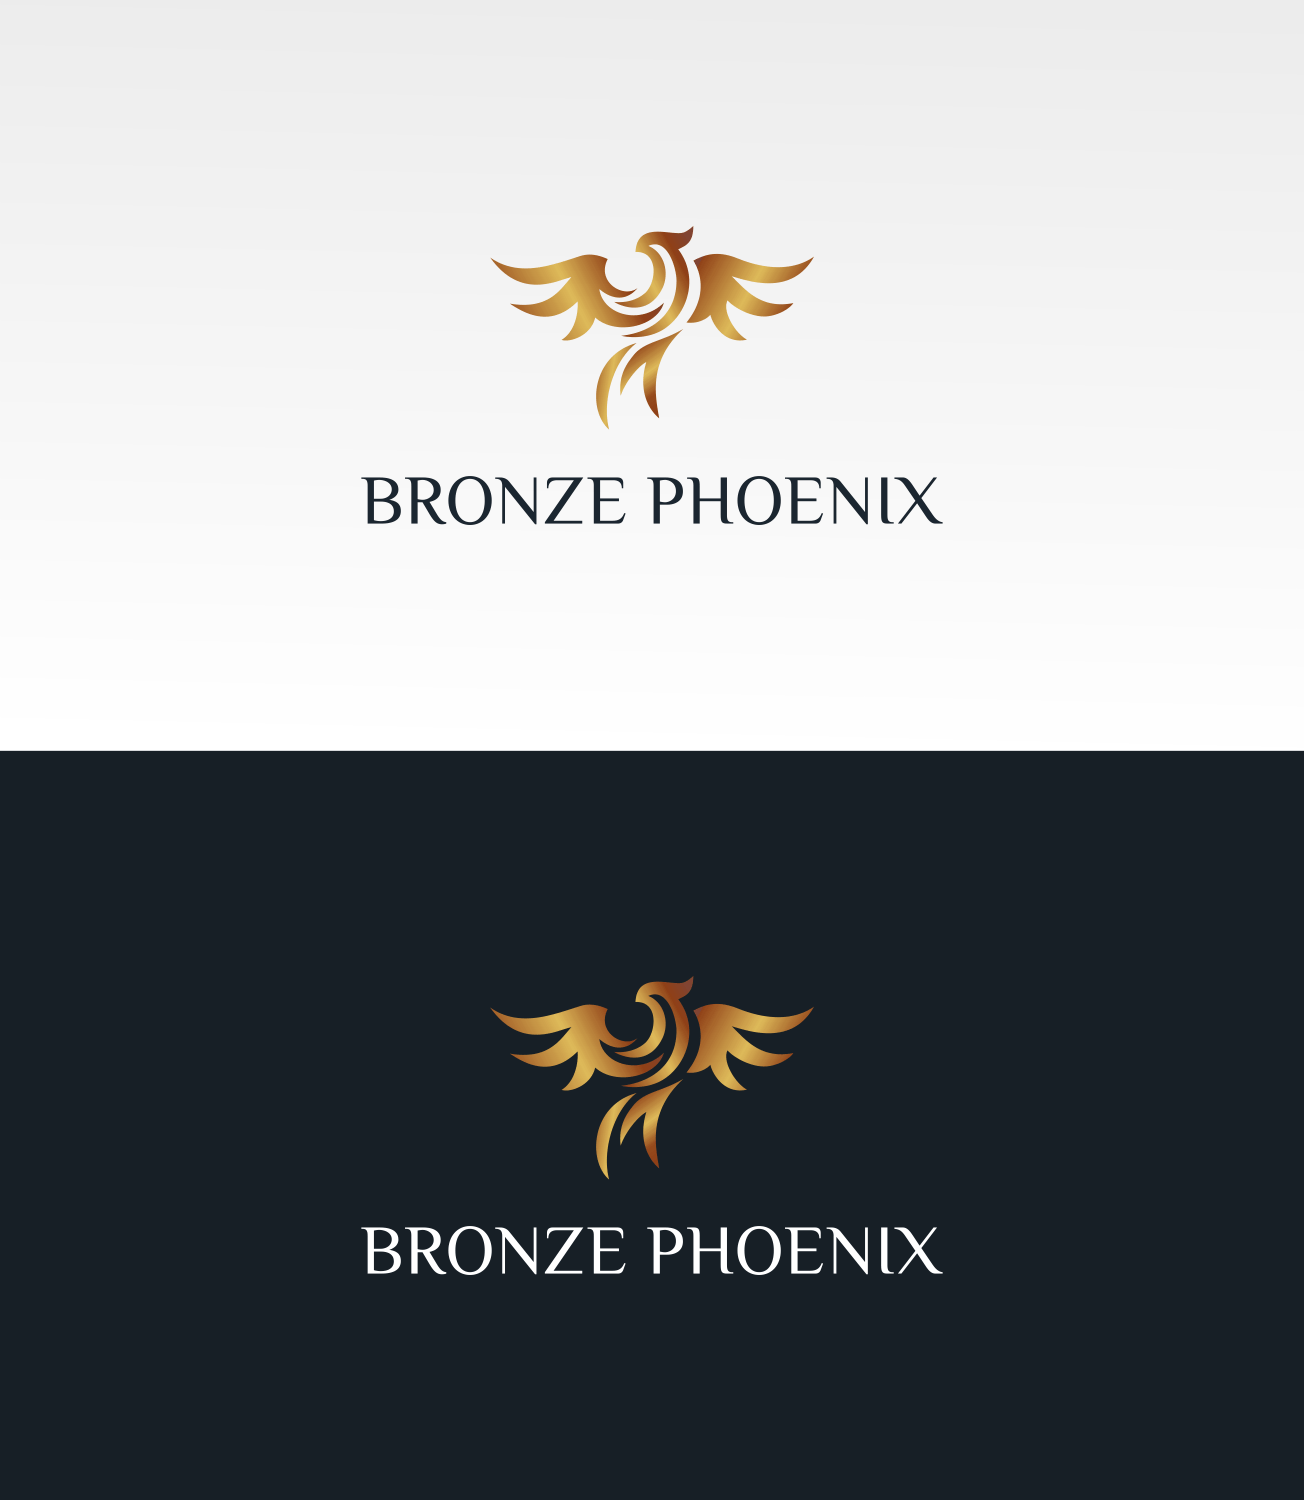 Bronze Company Logo - Elegant, Upmarket, Professional Service Logo Design for Bronze